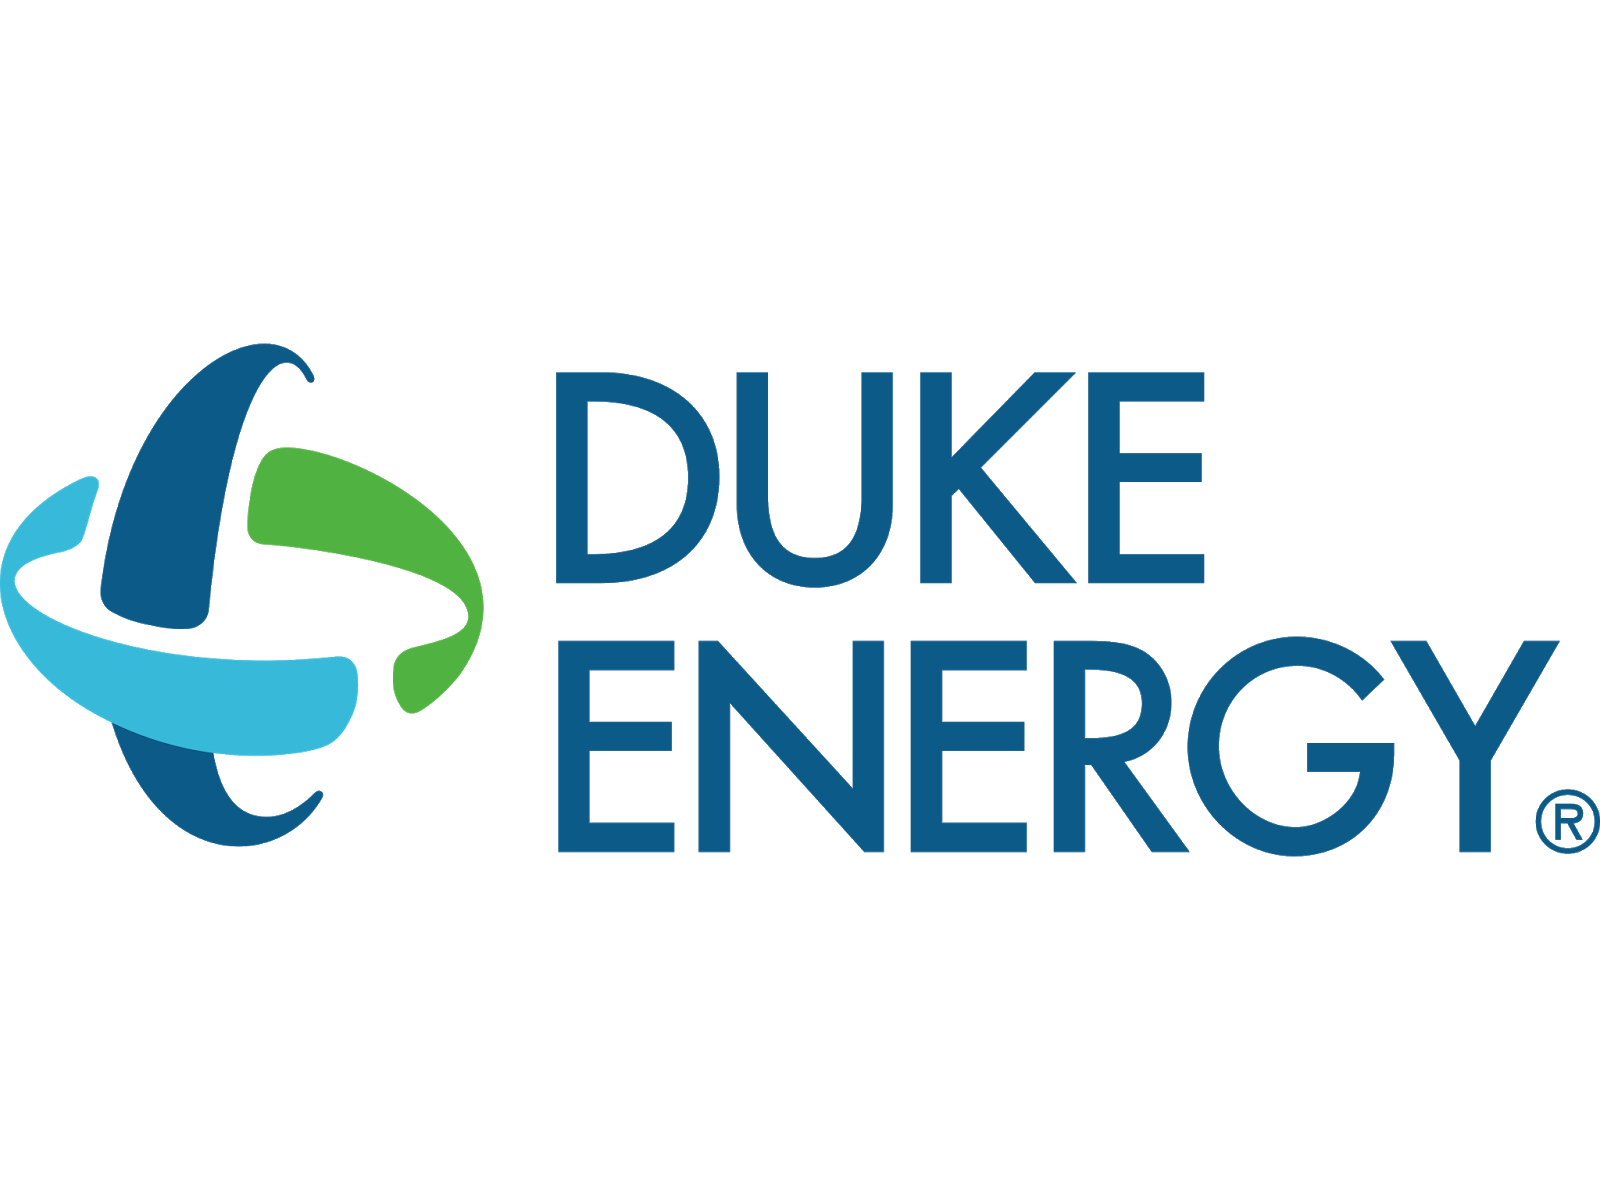 Download Vector Duke Energy Logo CDR, PNG Format | GUDRIL LOGO | Tempat